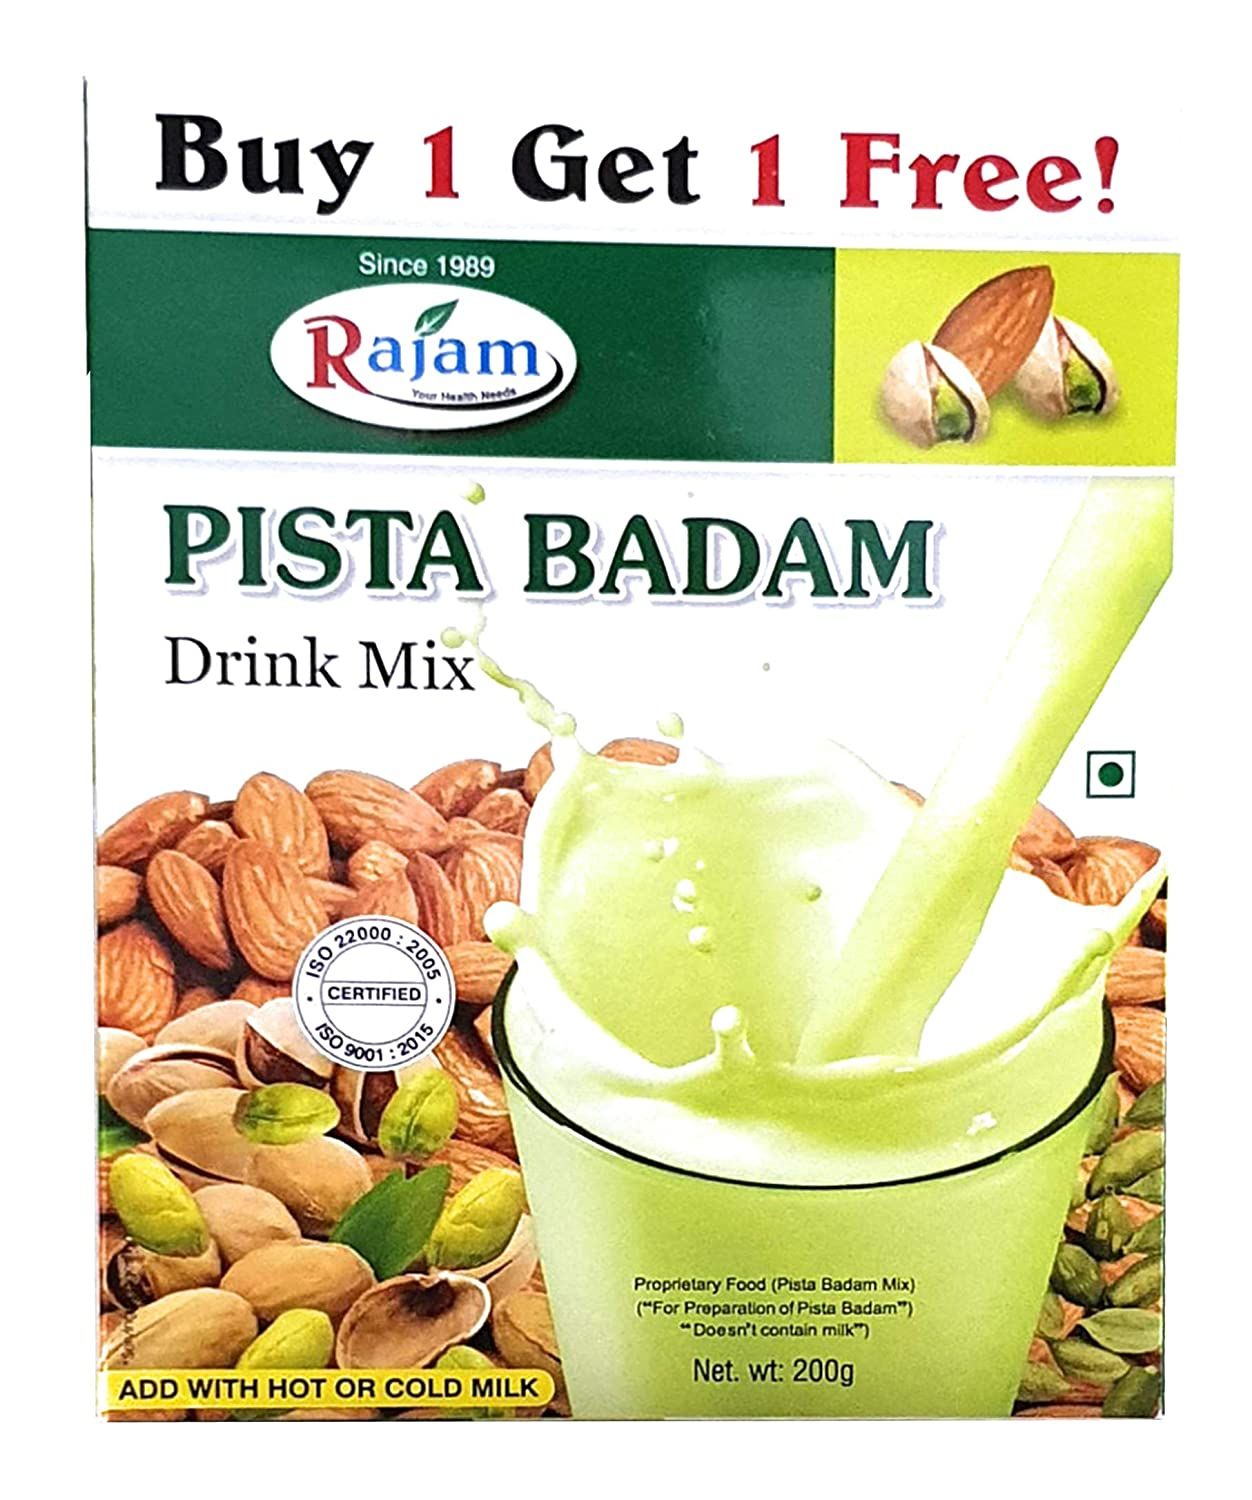 Rajam Pista Badam Drink Mix Image